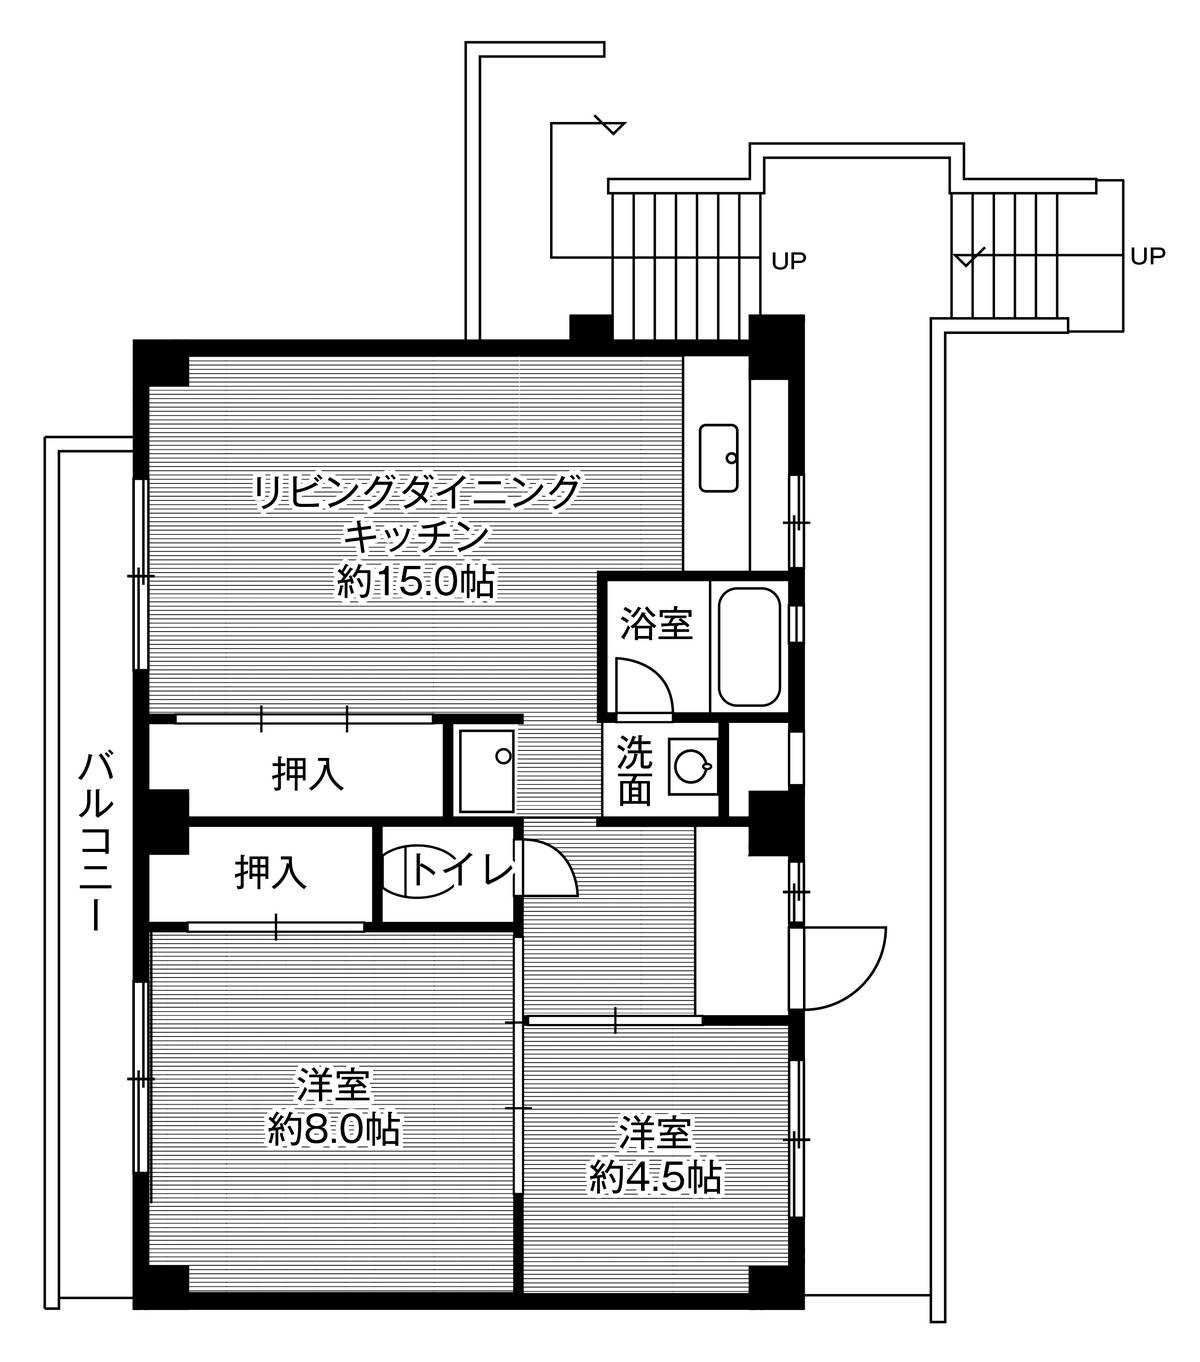 3DK floorplan of Village House Tsuda in Toyohashi-shi